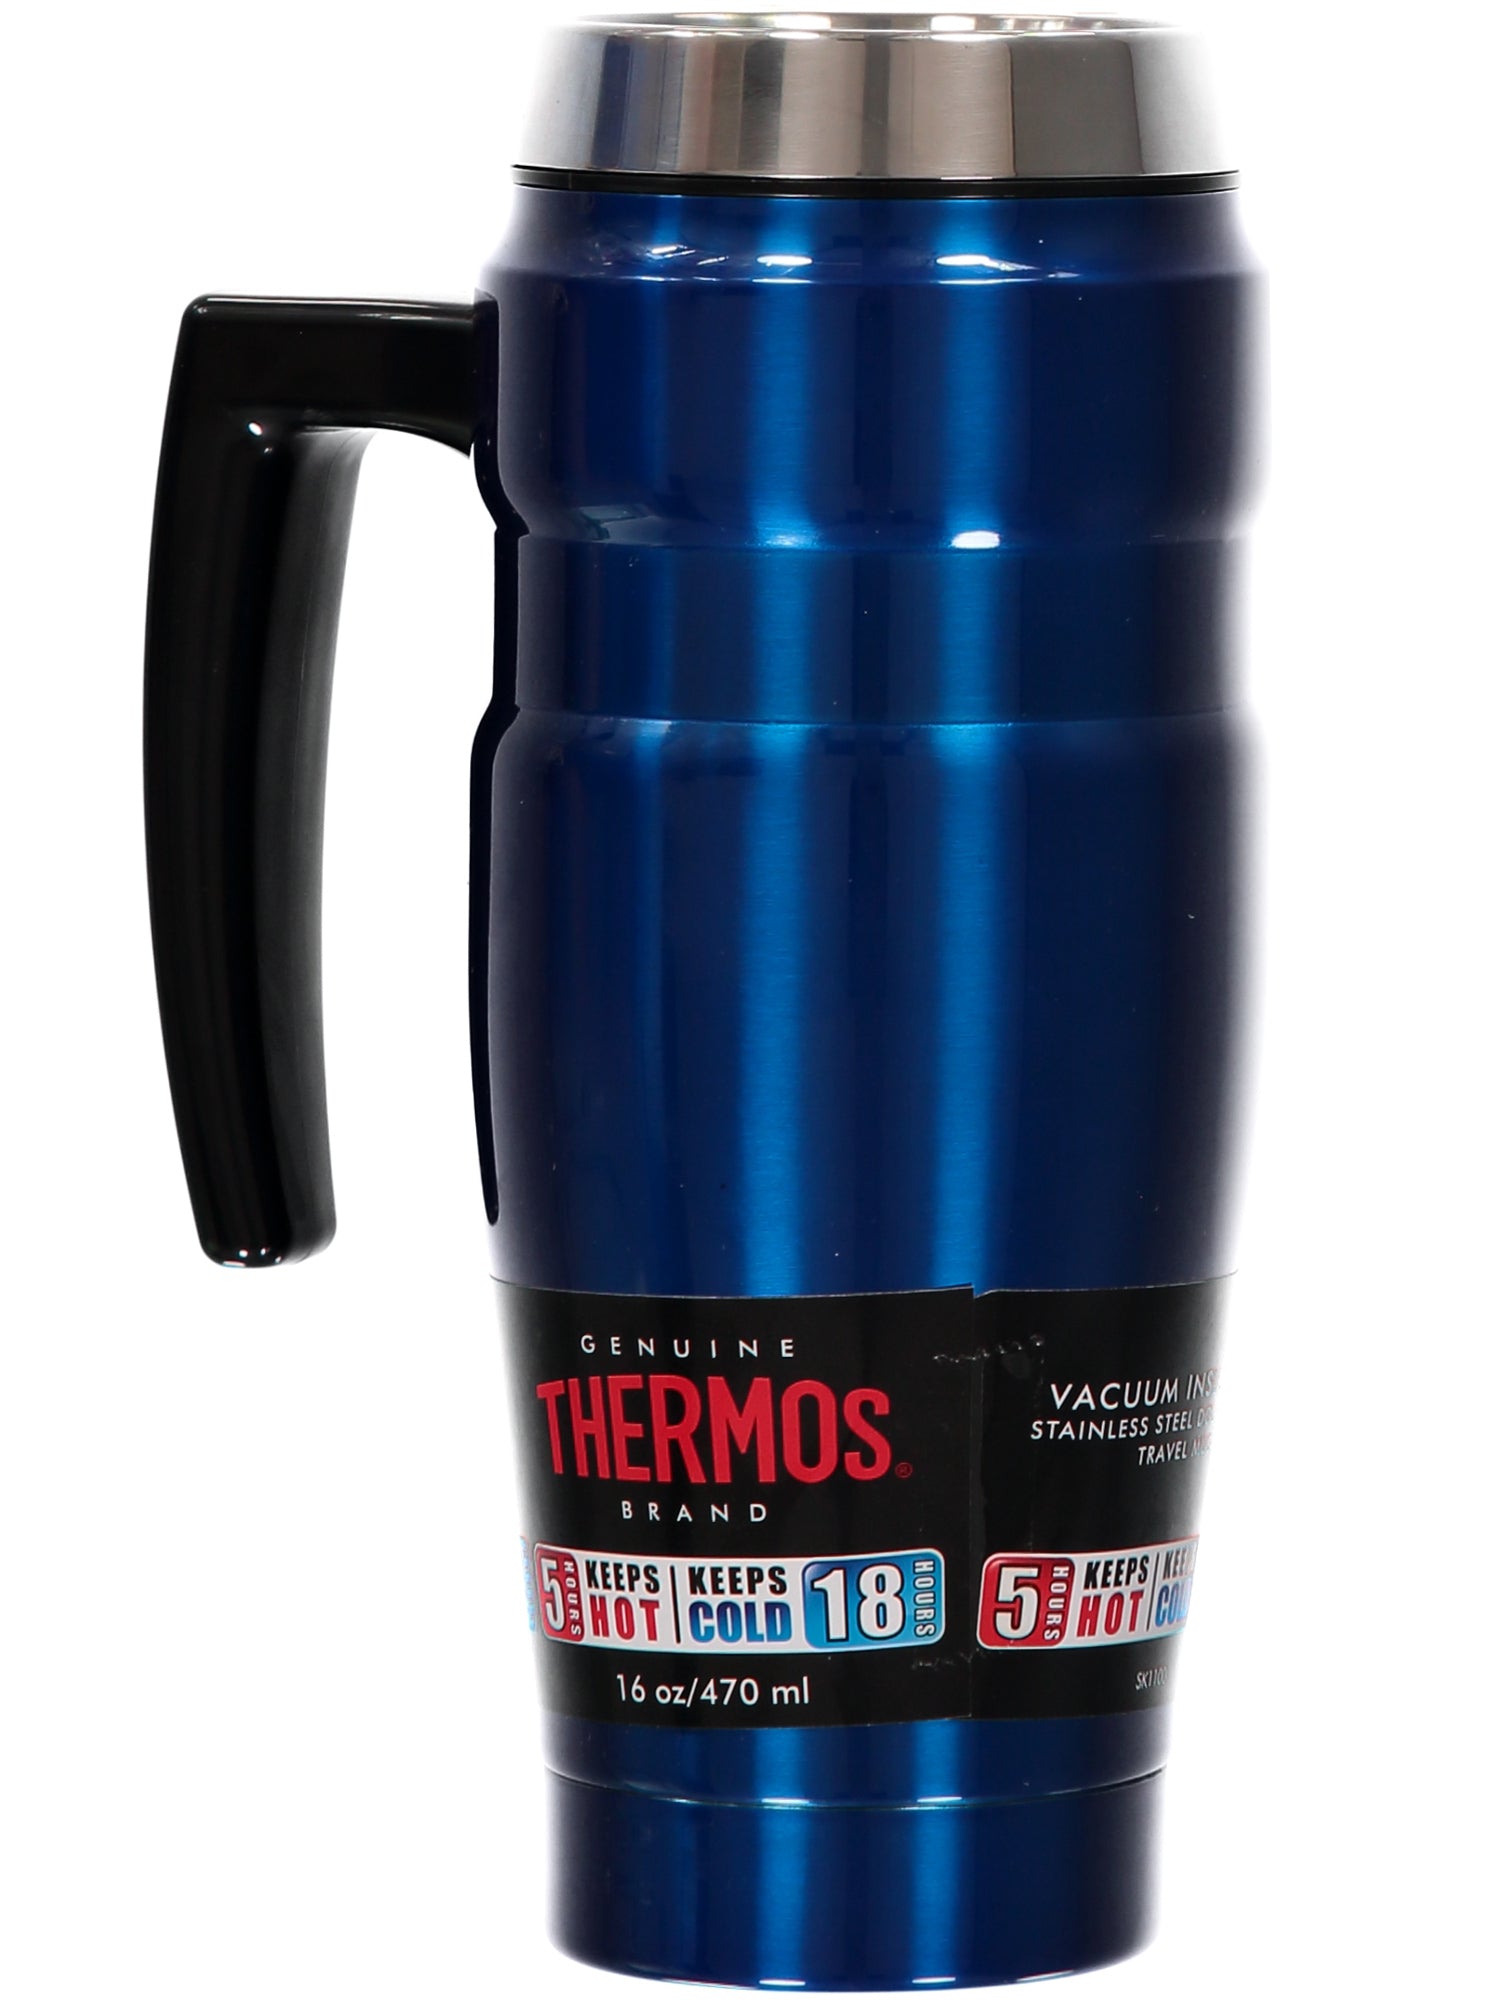 Thermos 16-oz. Stainless Steel Vacuum Travel Mug